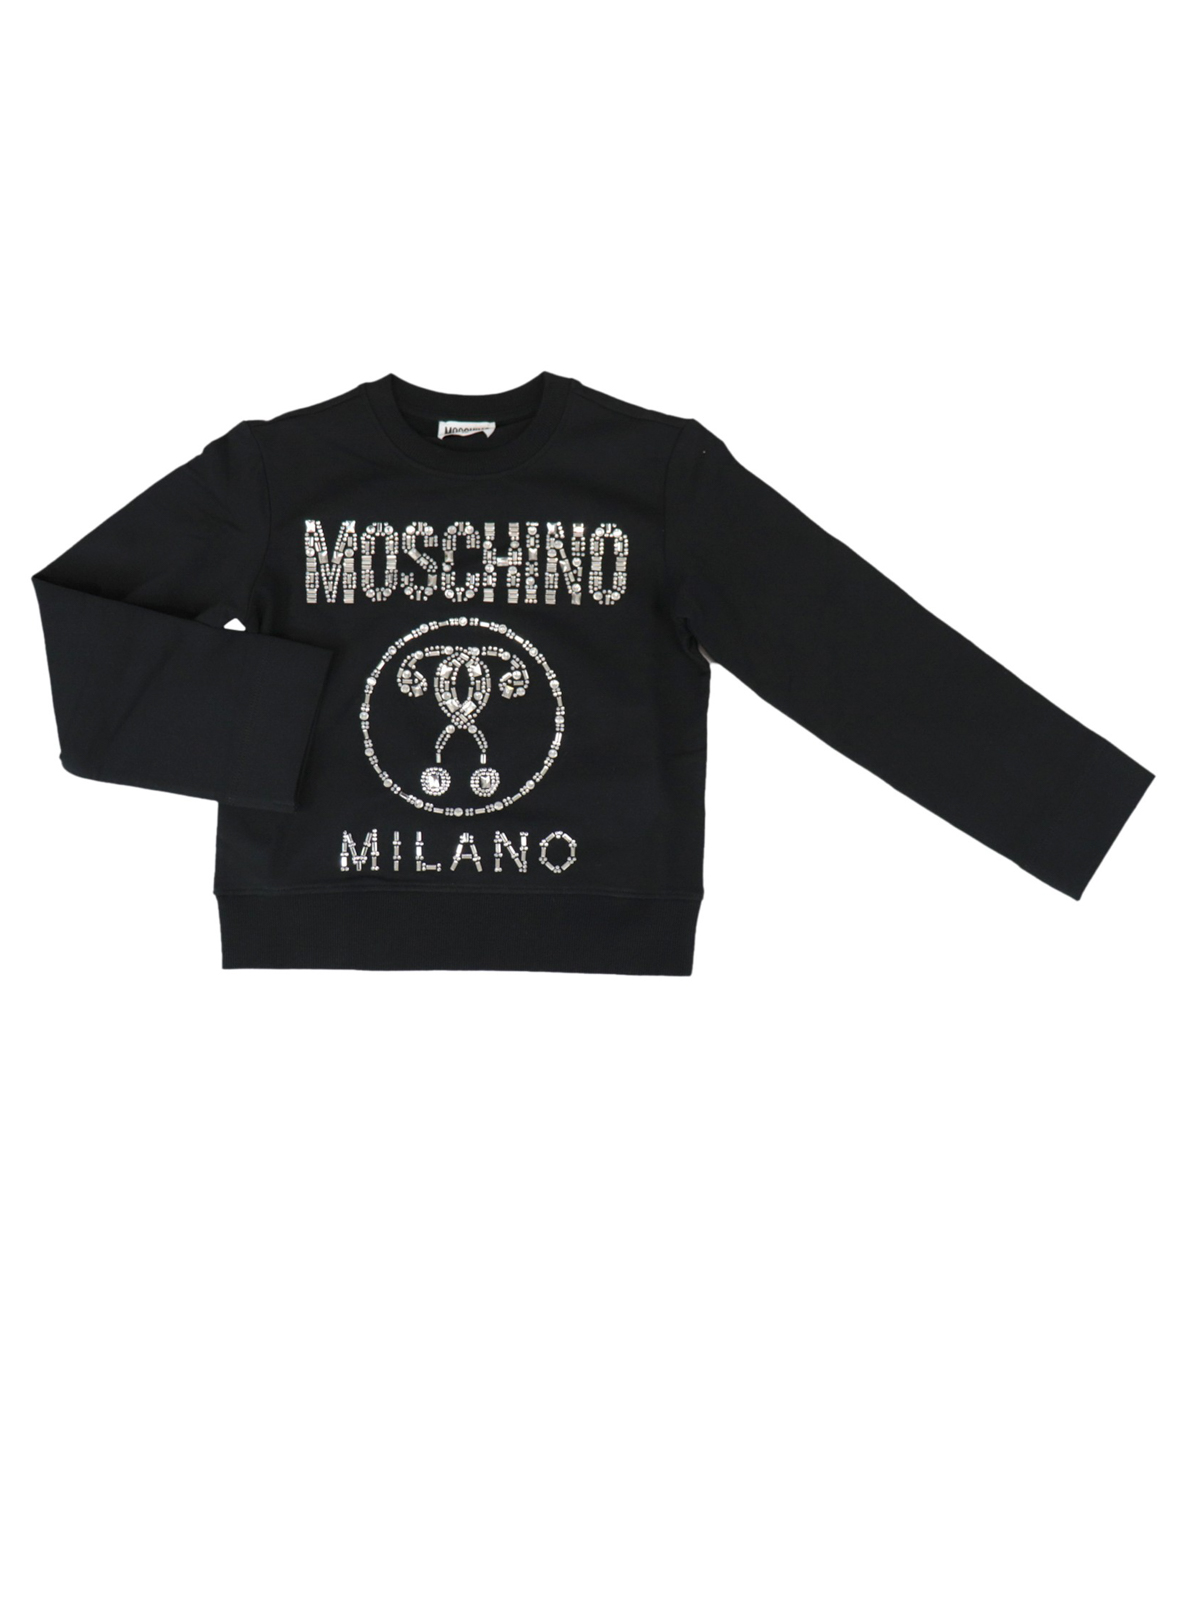 moschino boys sweatshirt